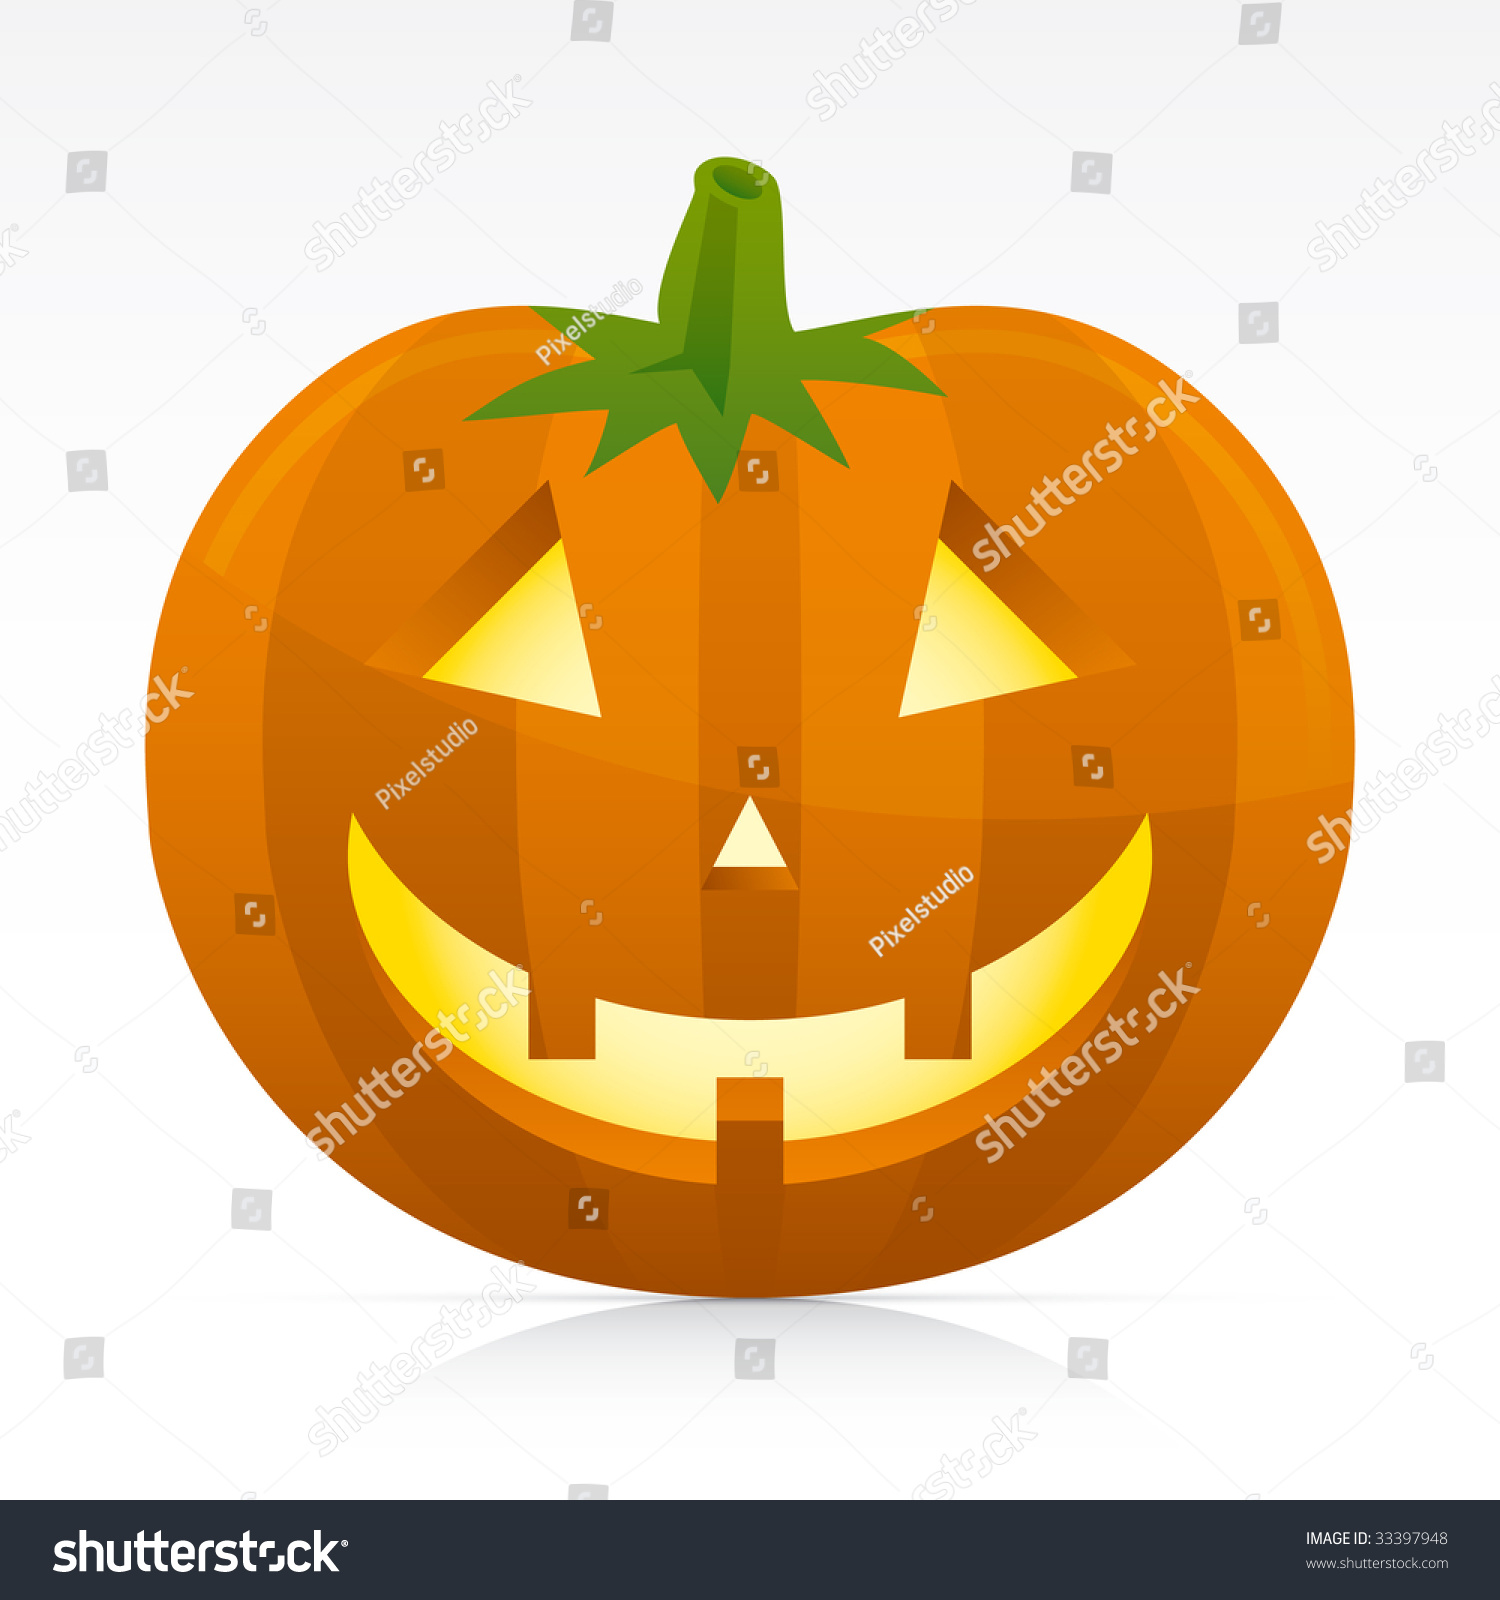 Halloween Pumpkin. Vector In Adobe Illustrator Eps For Multiple Applications.  33397948 